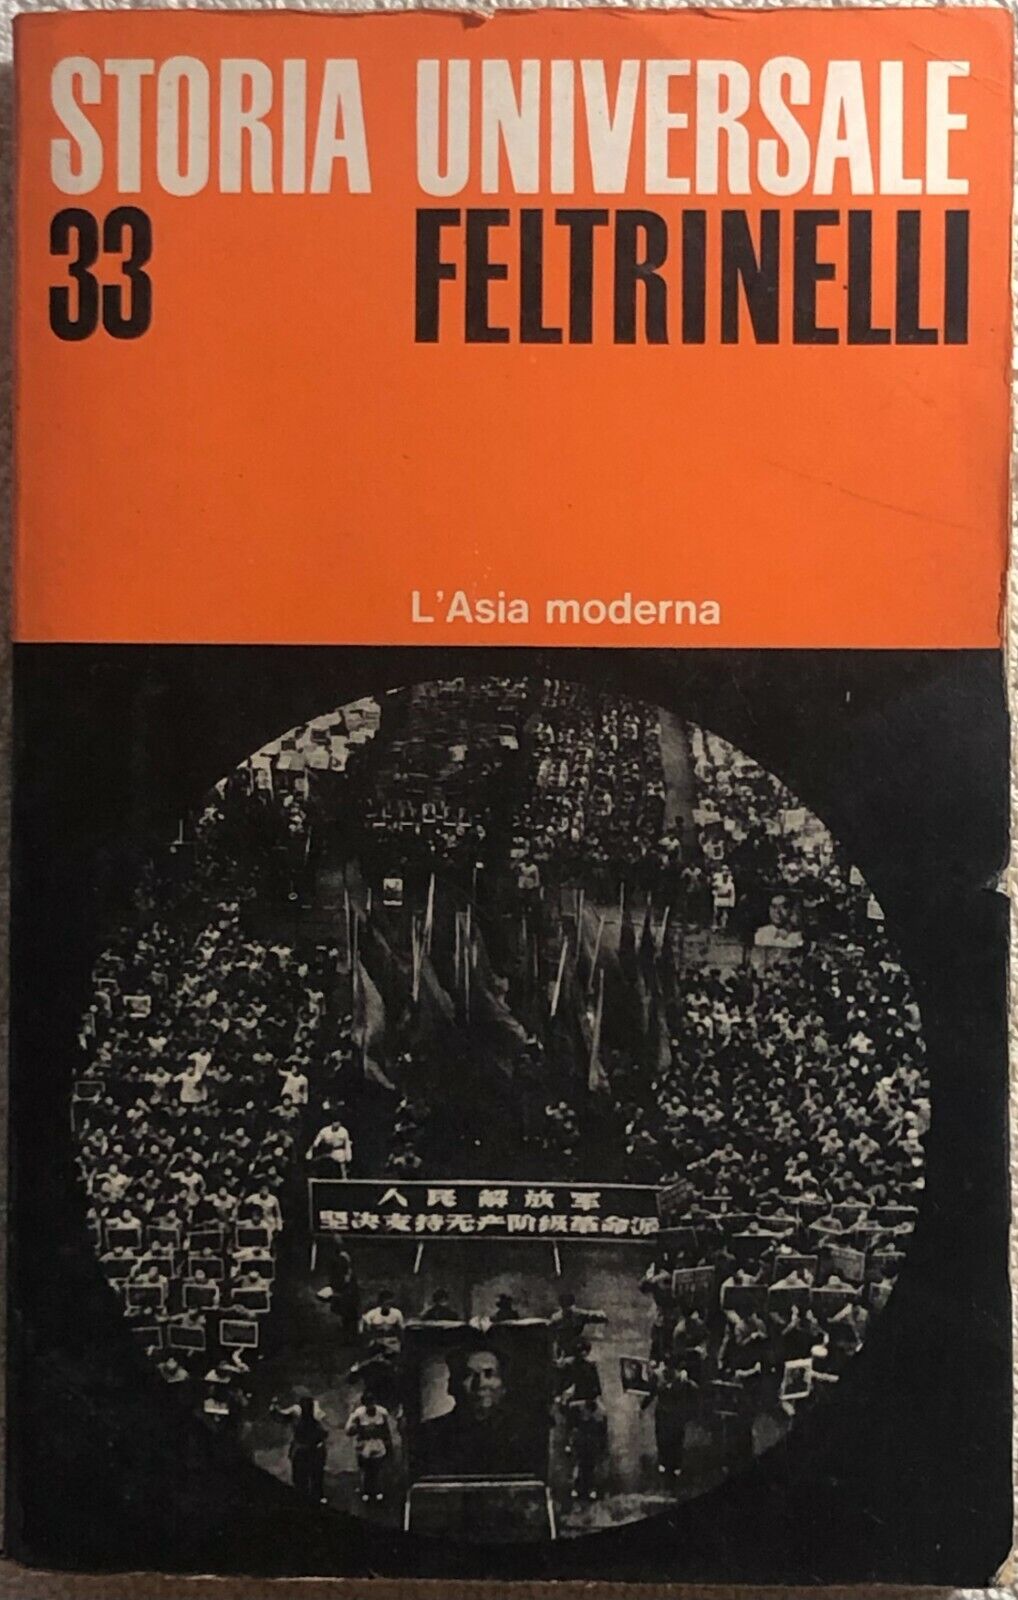 Storia universale n. 33 - L'Asia Moderna di Aa.vv.,  1971,  Feltrinelli